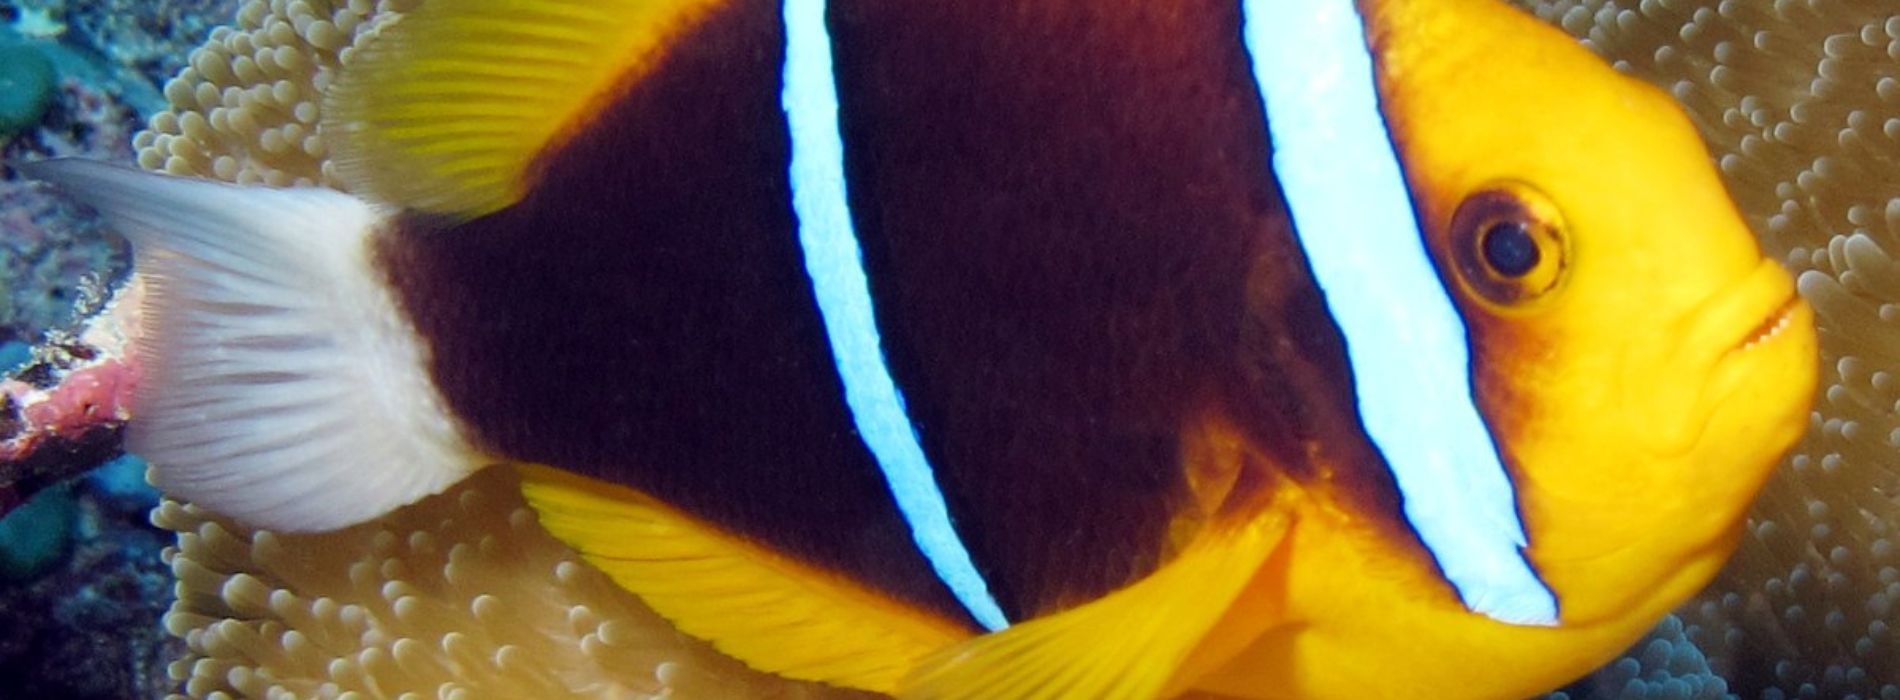 anemonefish swimming in its habitat